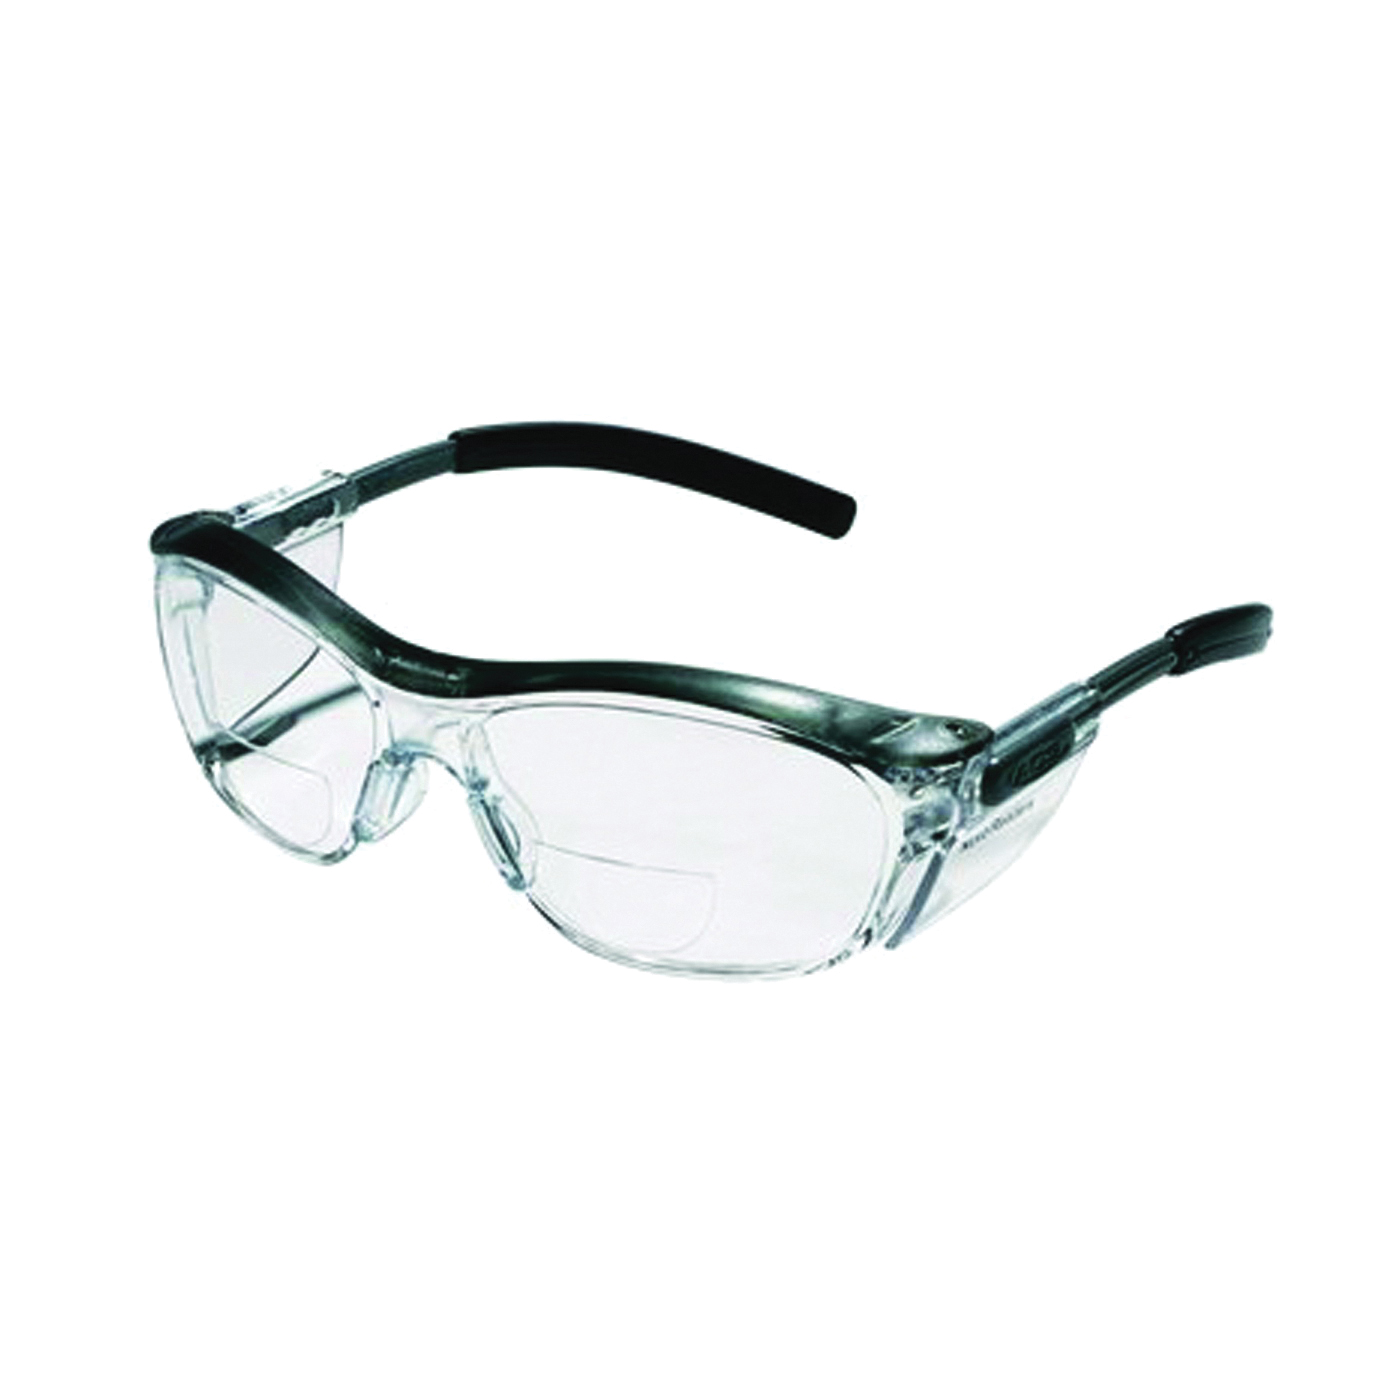 91193-00002T Readers Safety Eyewear, Anti-Fog Lens